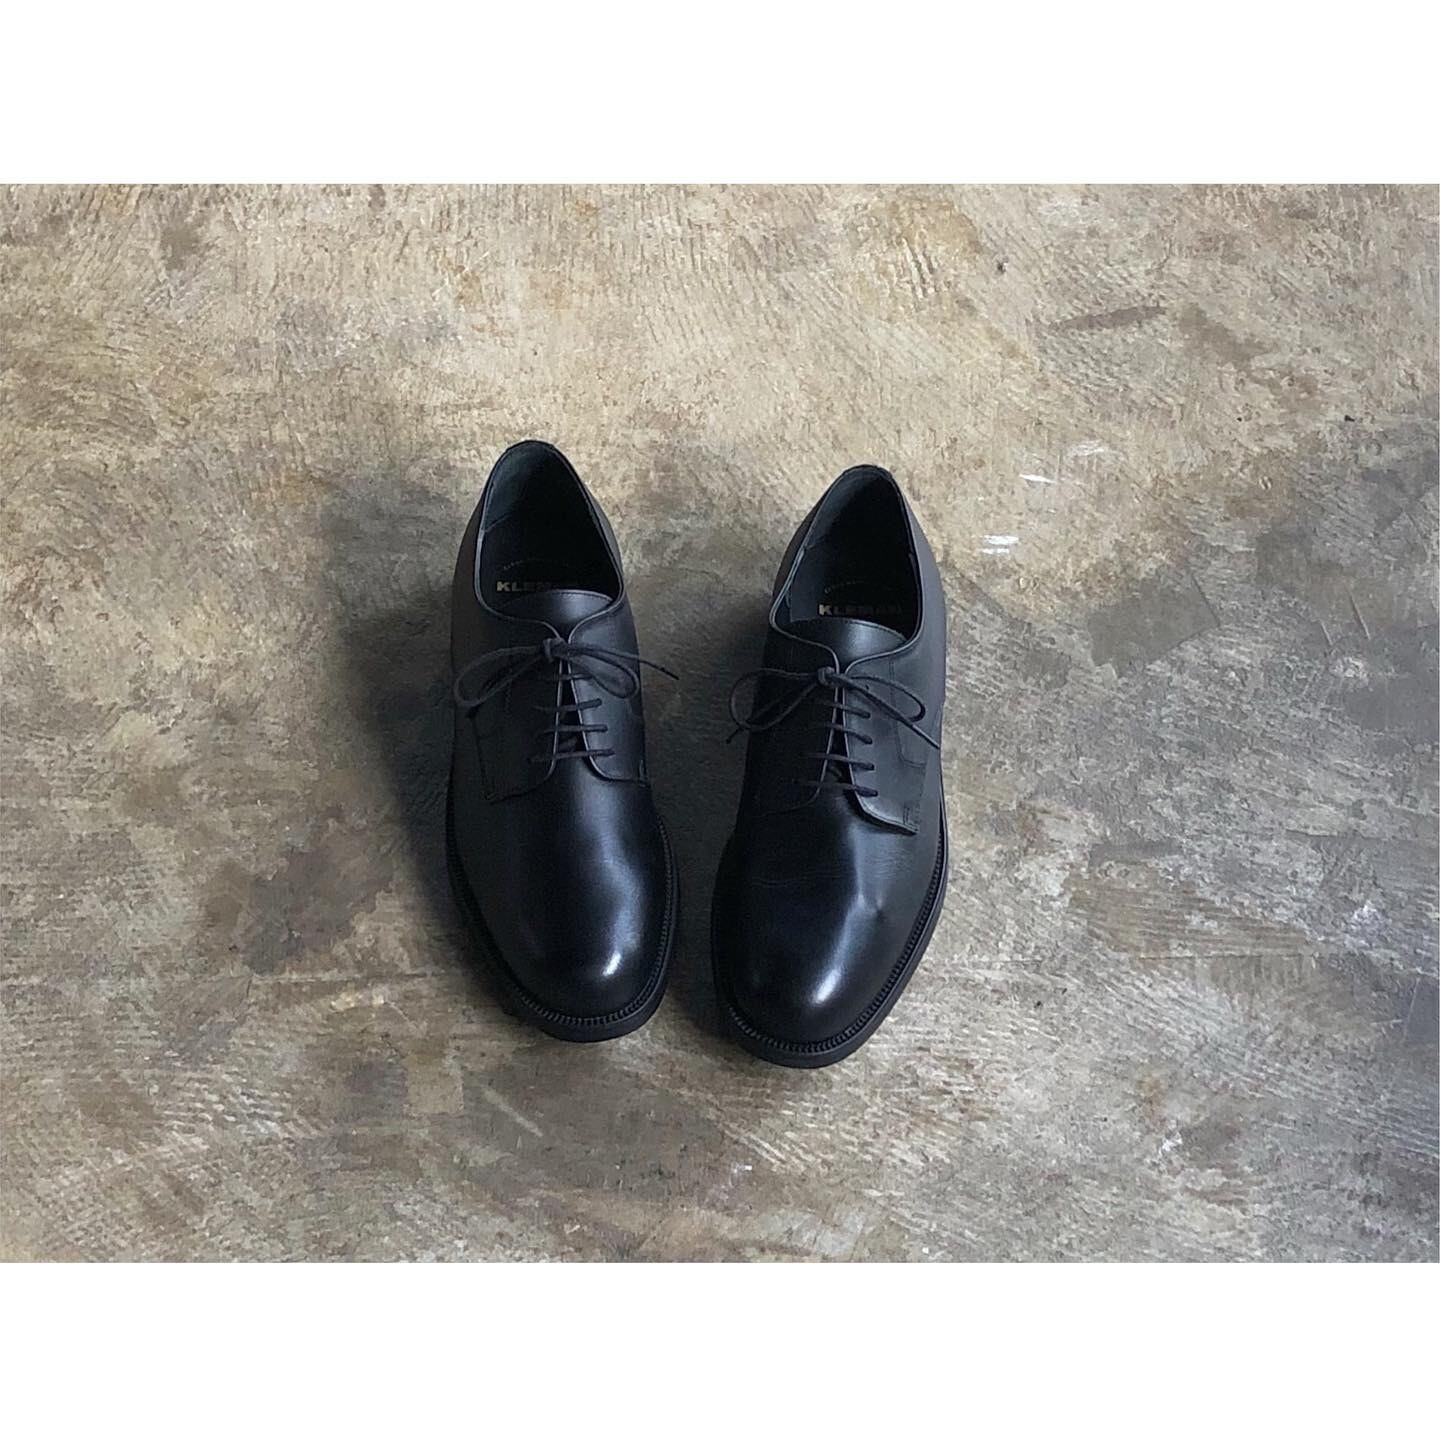 KLEMAN(クレマン) 『PASTANI MENS』 Plane Toe Leather Shoes BLACK | AUTHENTIC